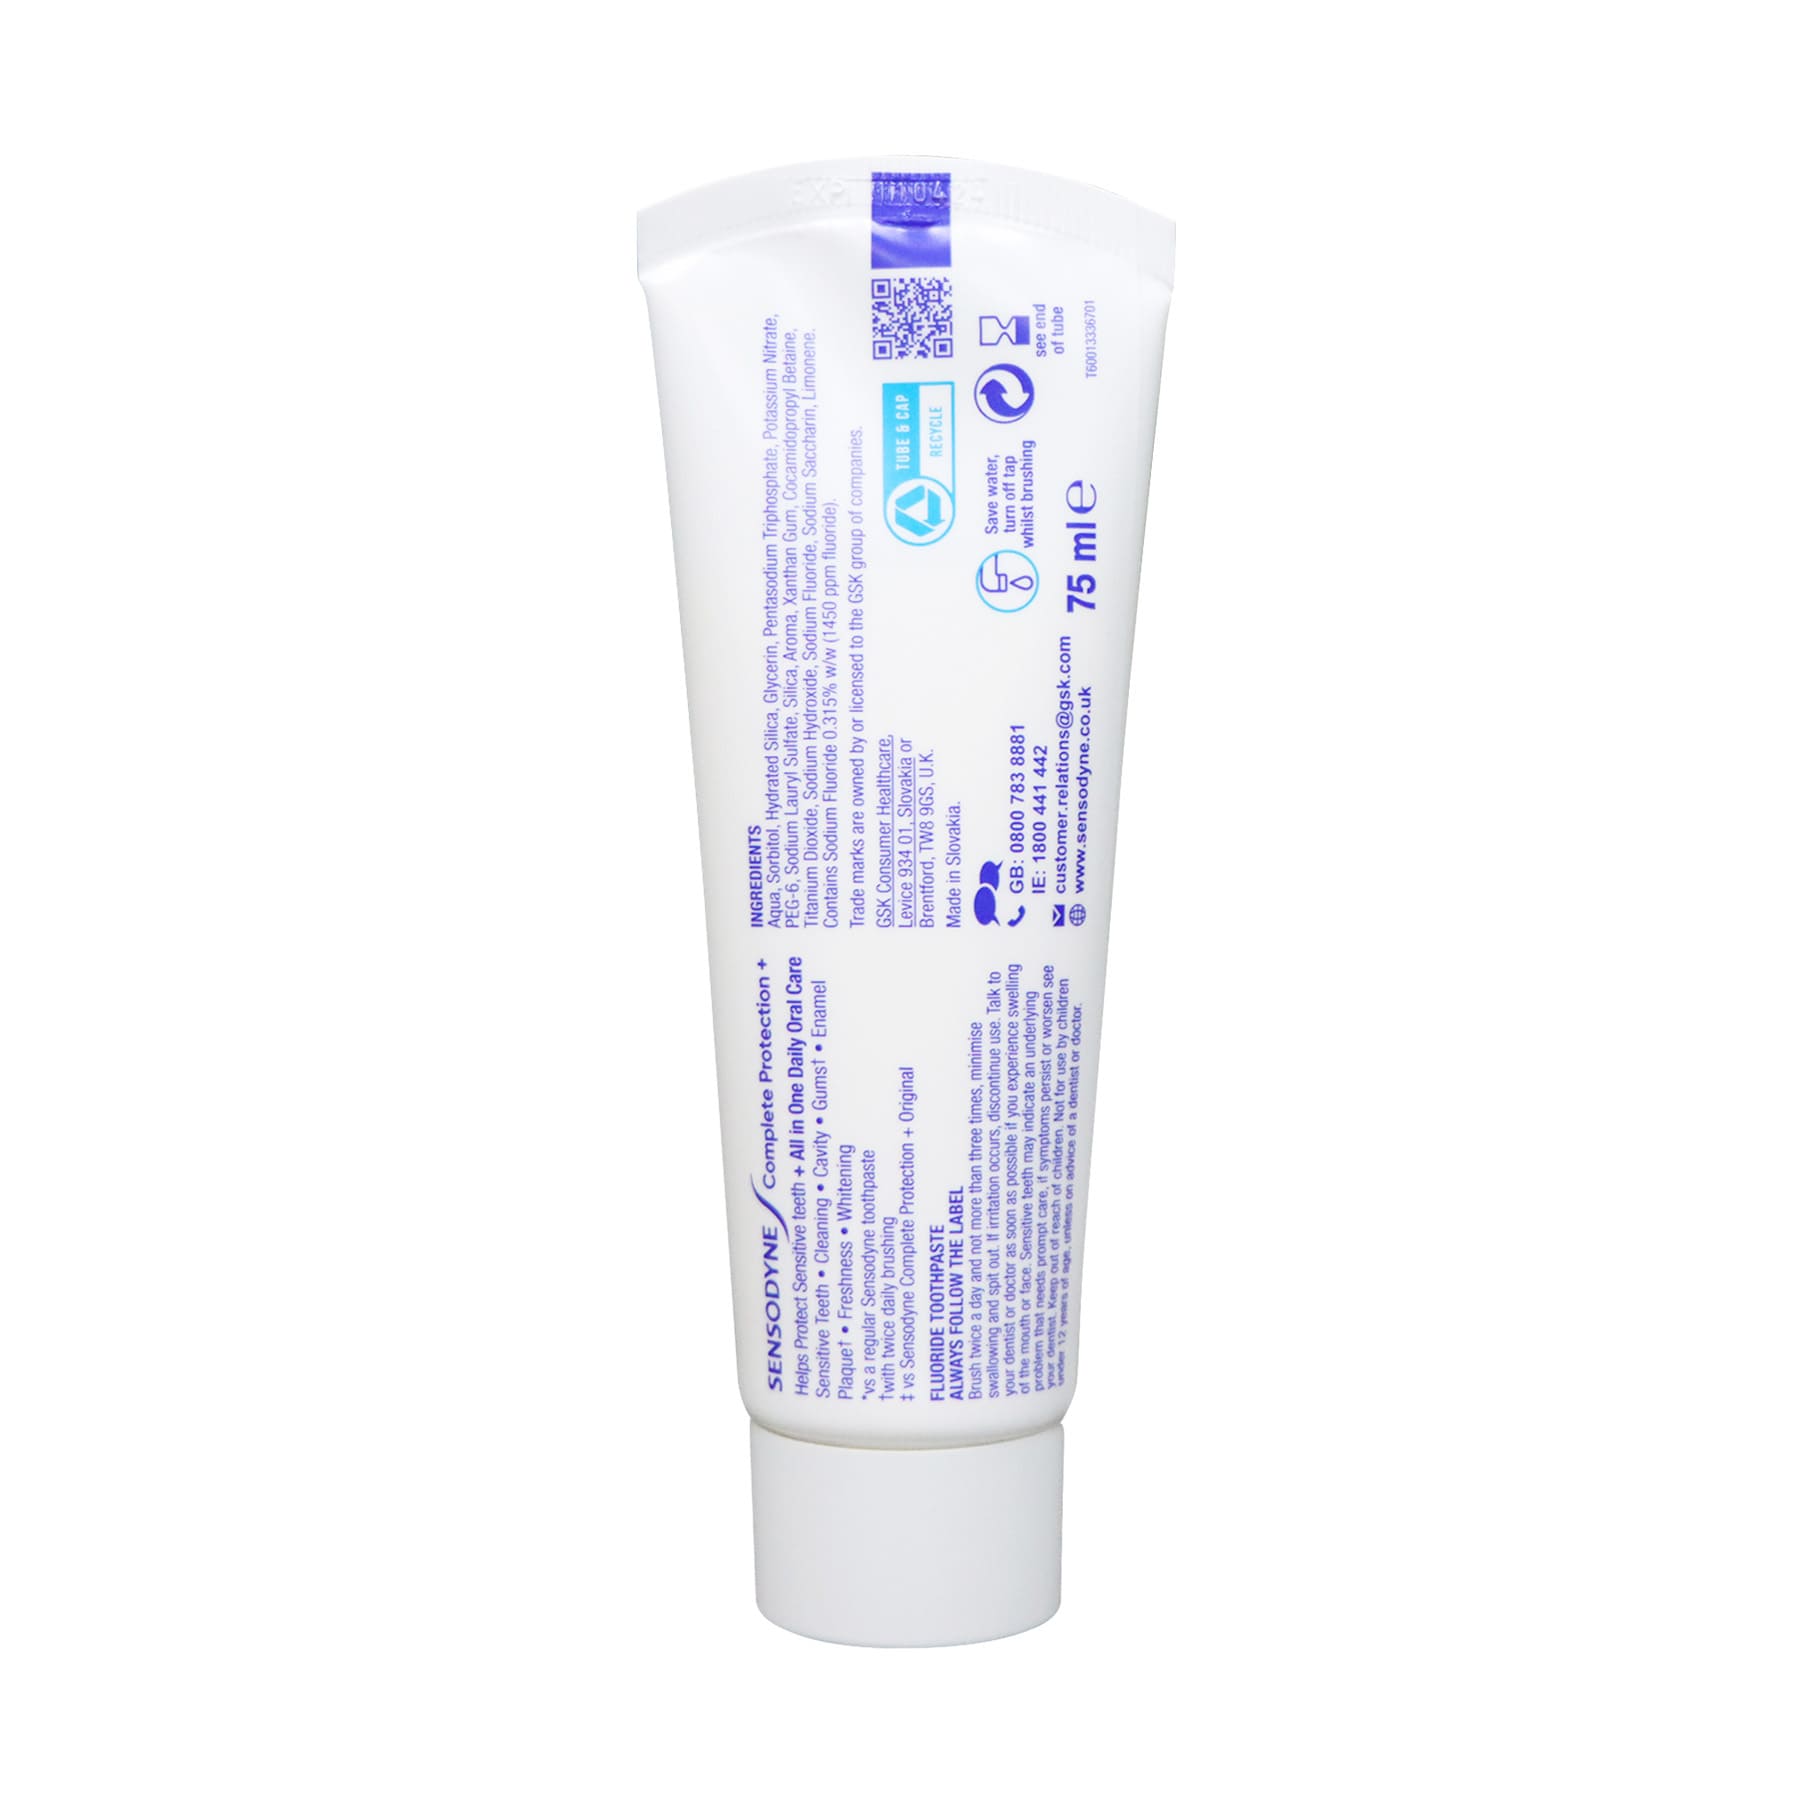 Sensodyne Complete Protection+ Advanced Whitening Toothpaste 75ml x 2